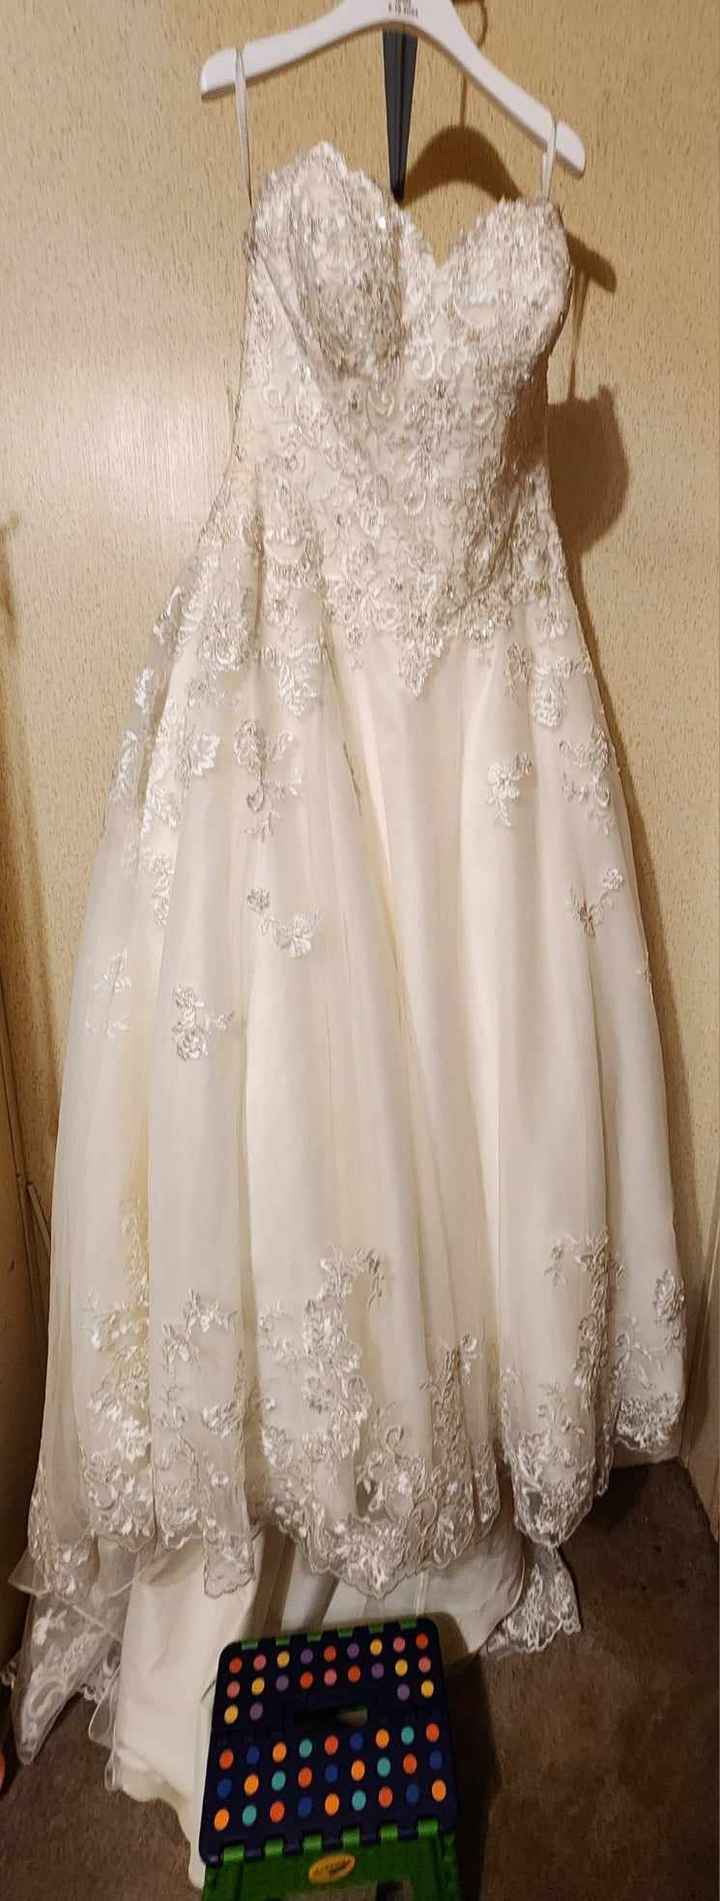 My wedding dress - 2